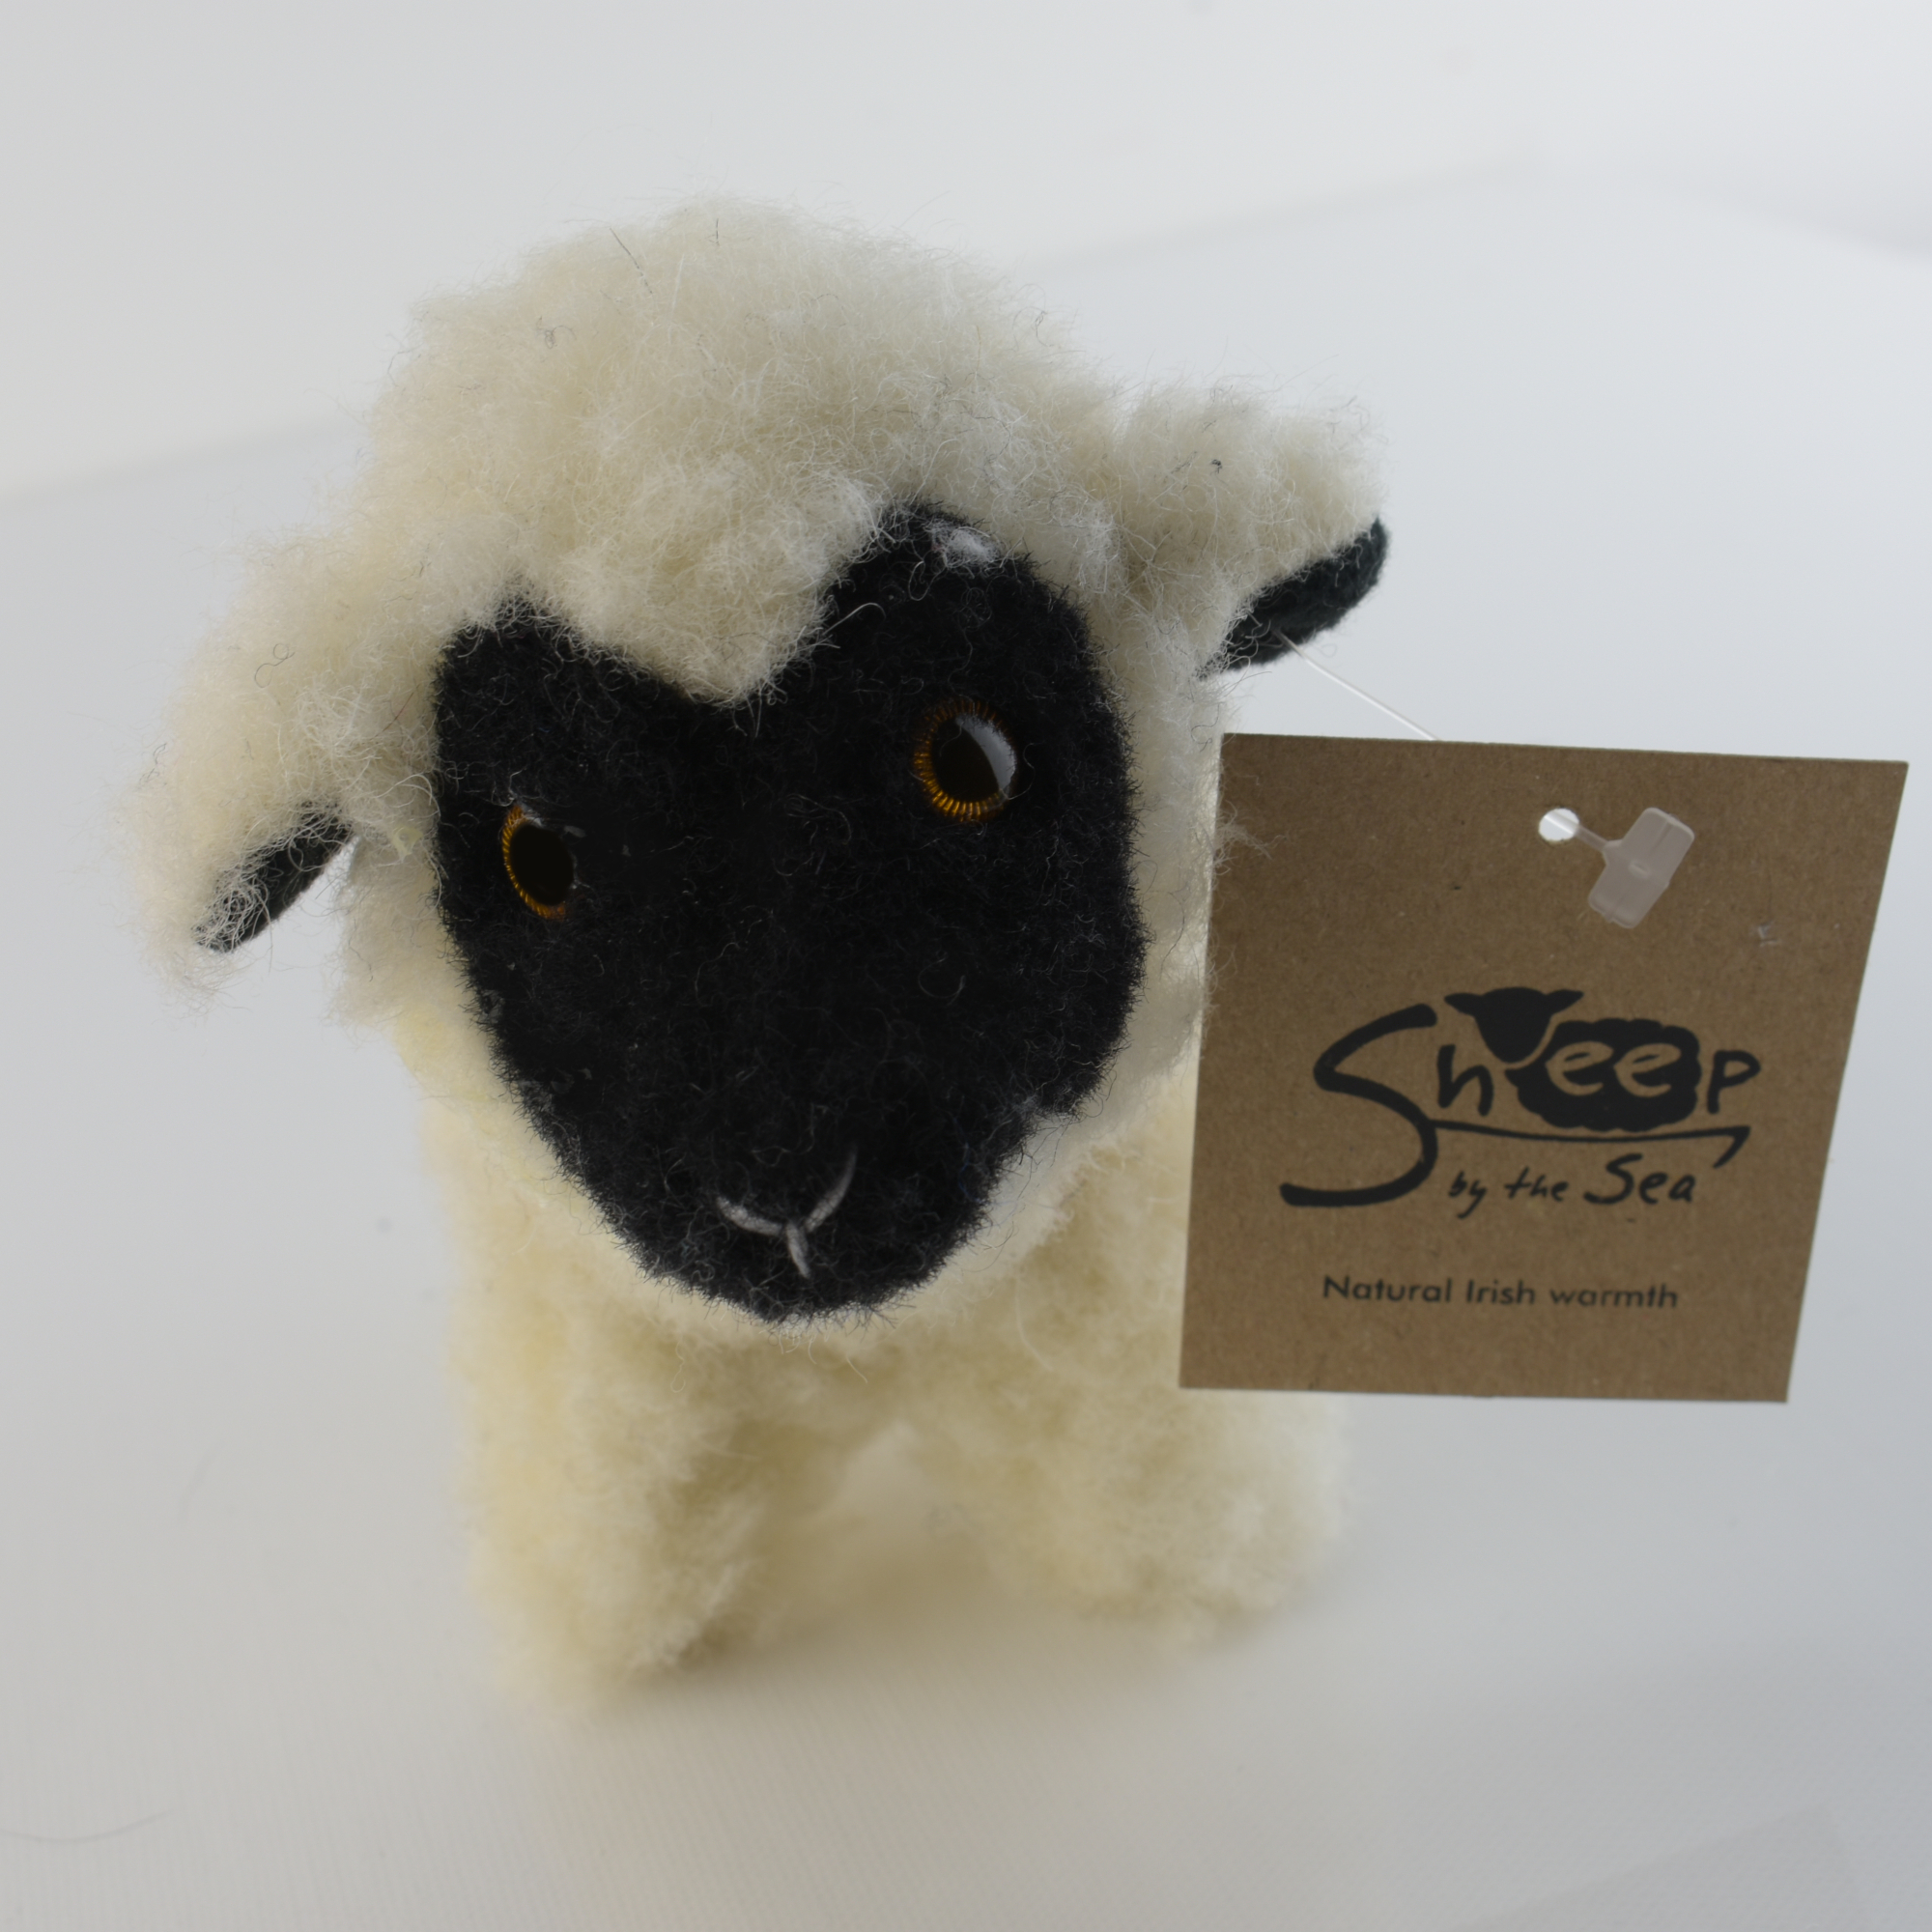 White and Black Wool Sheep 